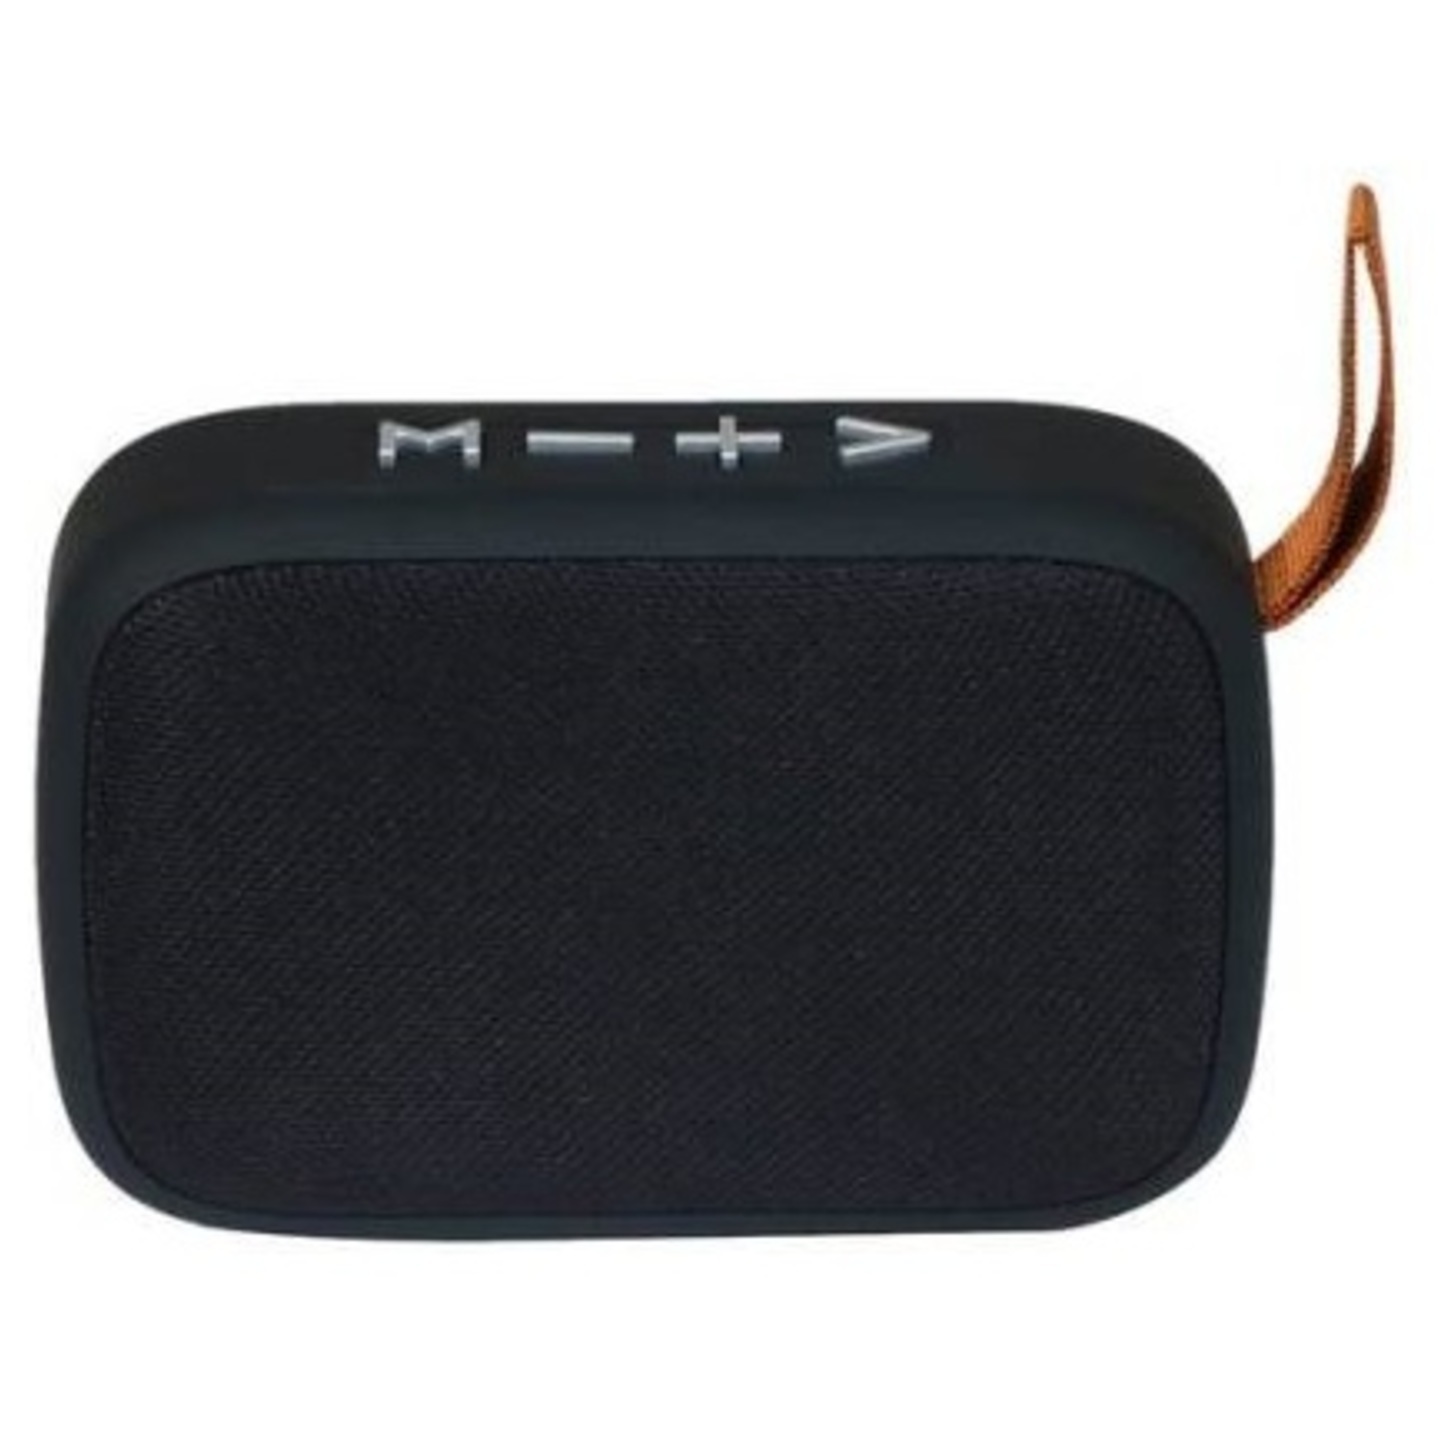 Tablepro Portable Bluetooth Wireless Speakers